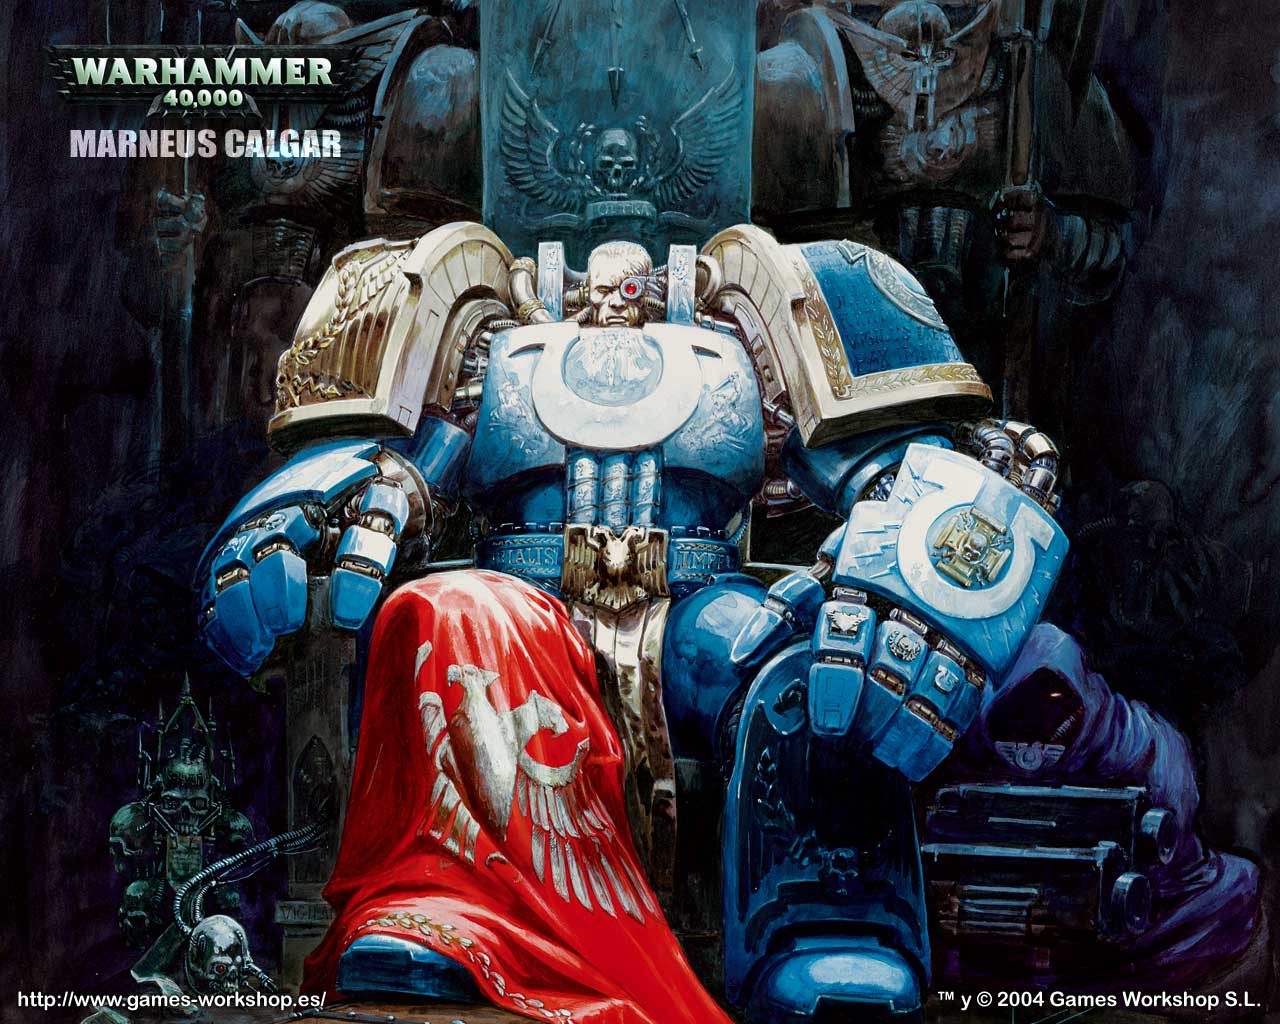 warhammer 40k, warhammer, video game, marneus calgar, space marine